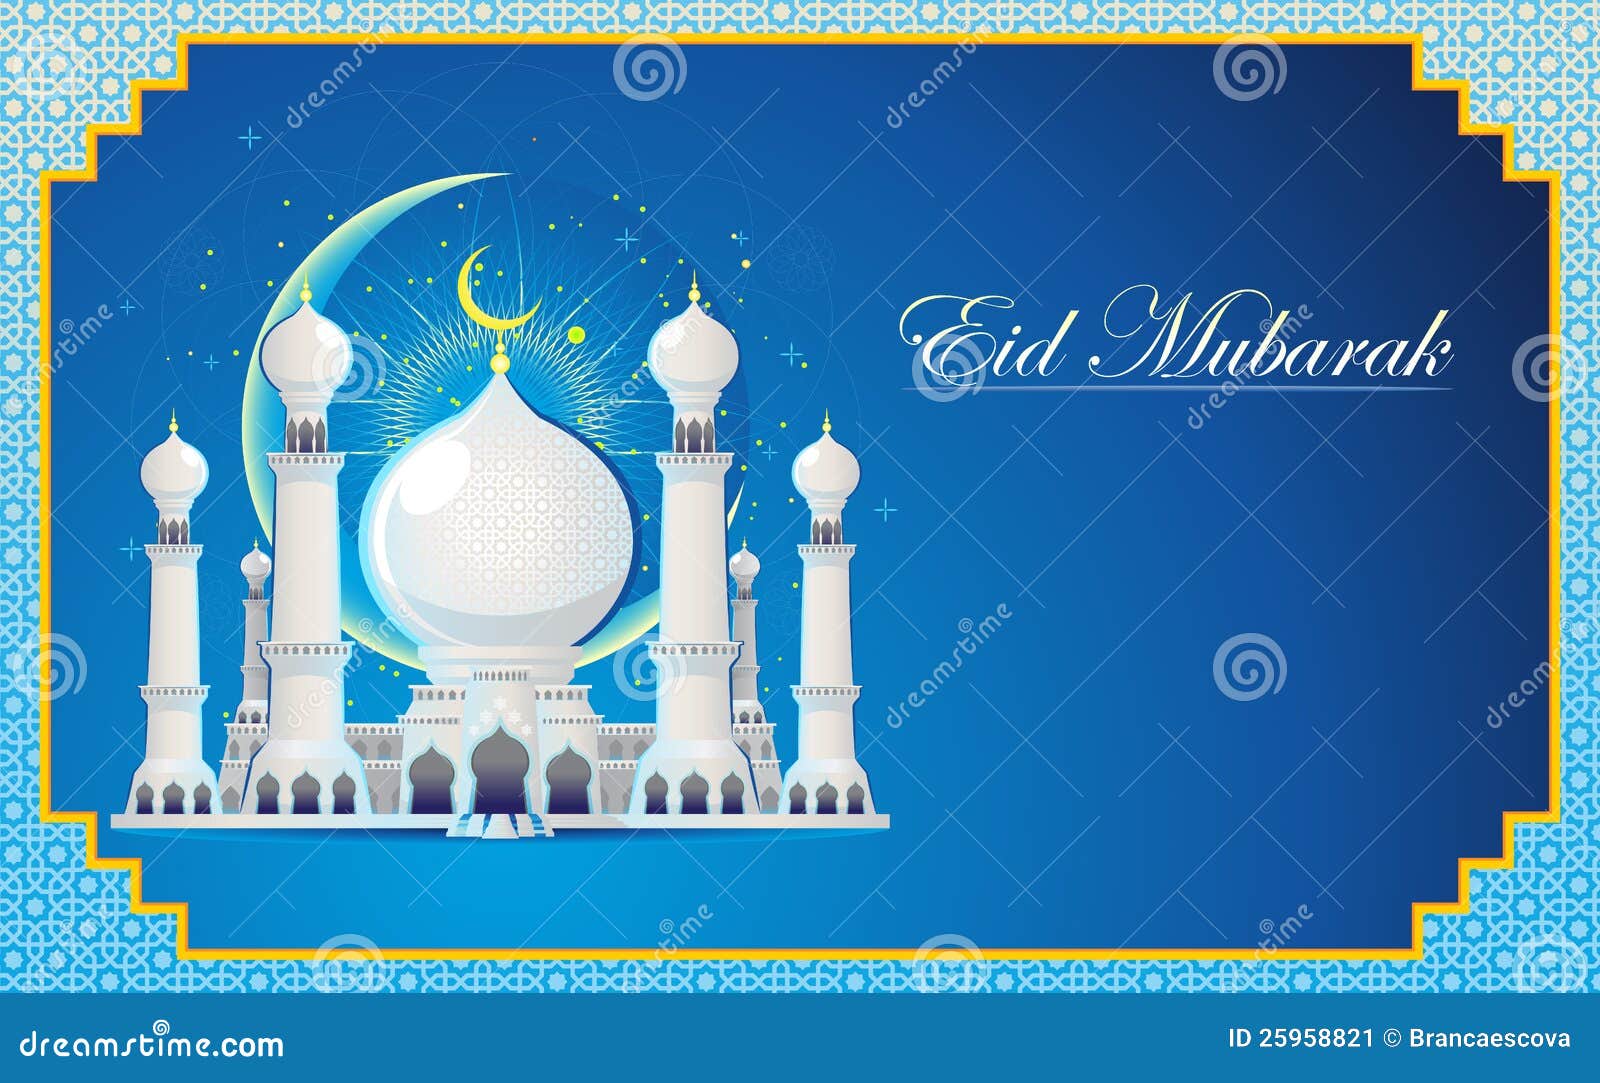 Eid Mubarak Greeting Card Stock Image - Image: 25958821